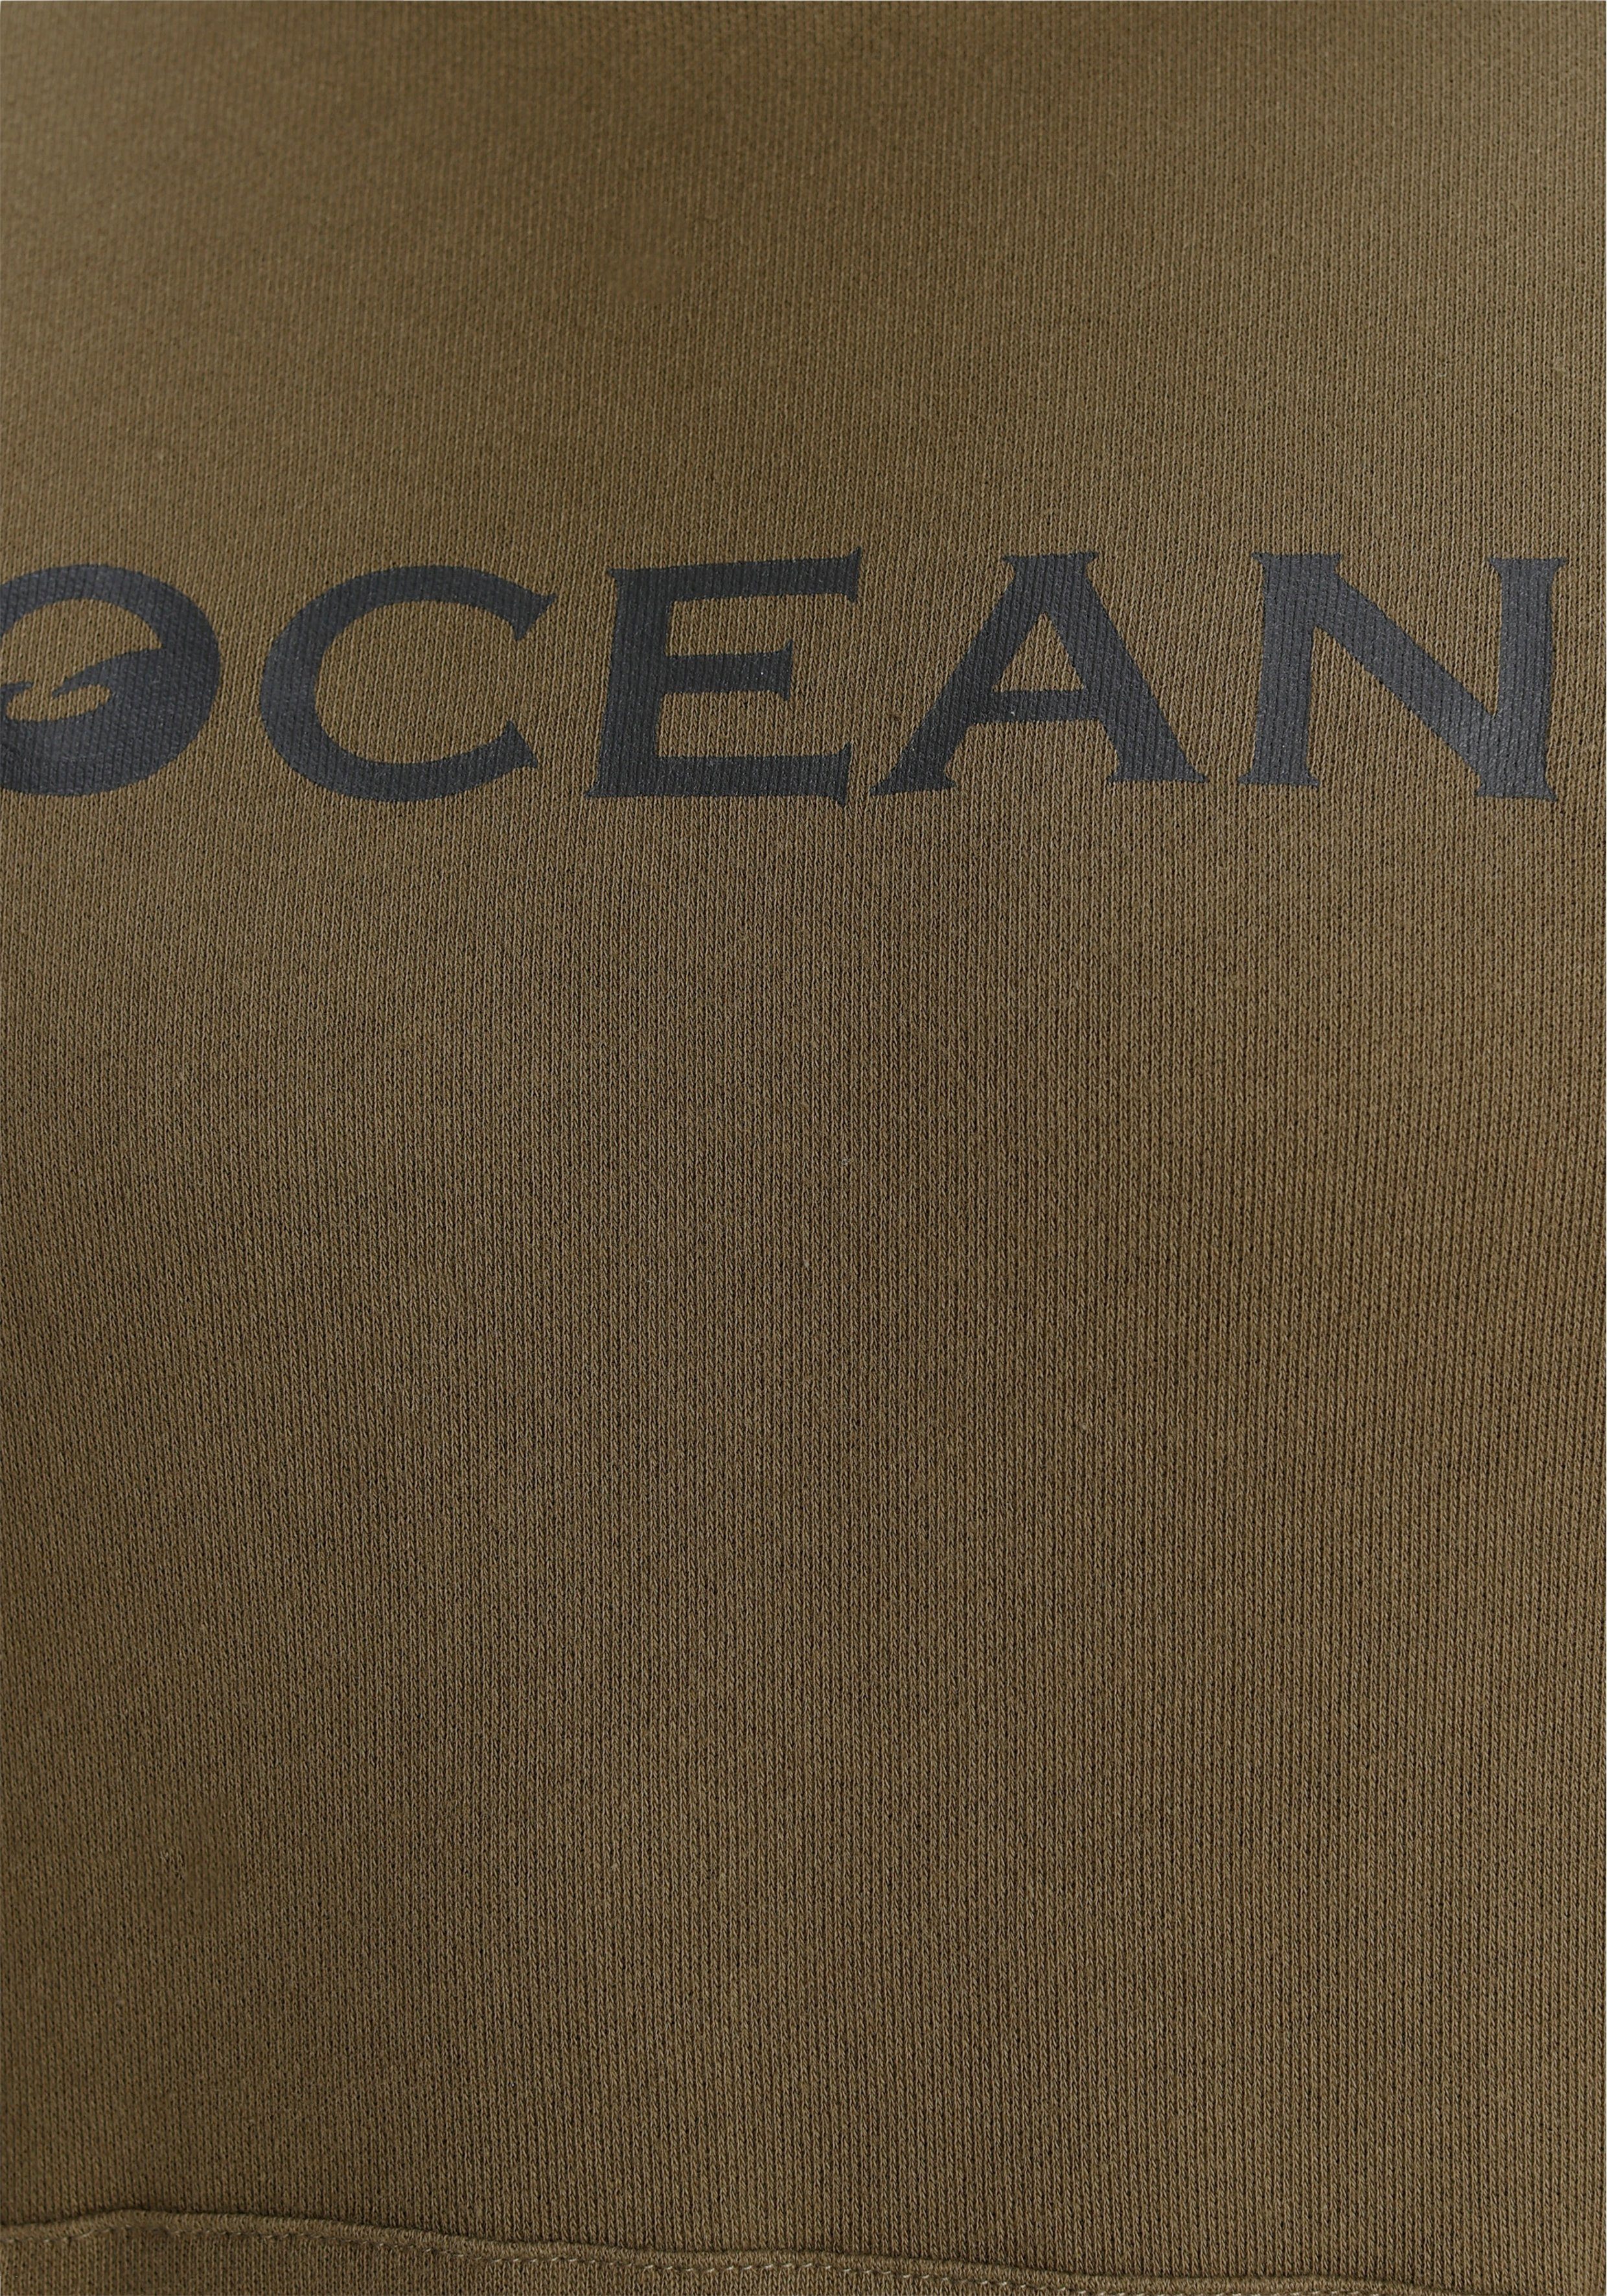 aus reiner Ocean Baumwolle Sportswear Kapuzensweatshirt Hoody khaki Essentials